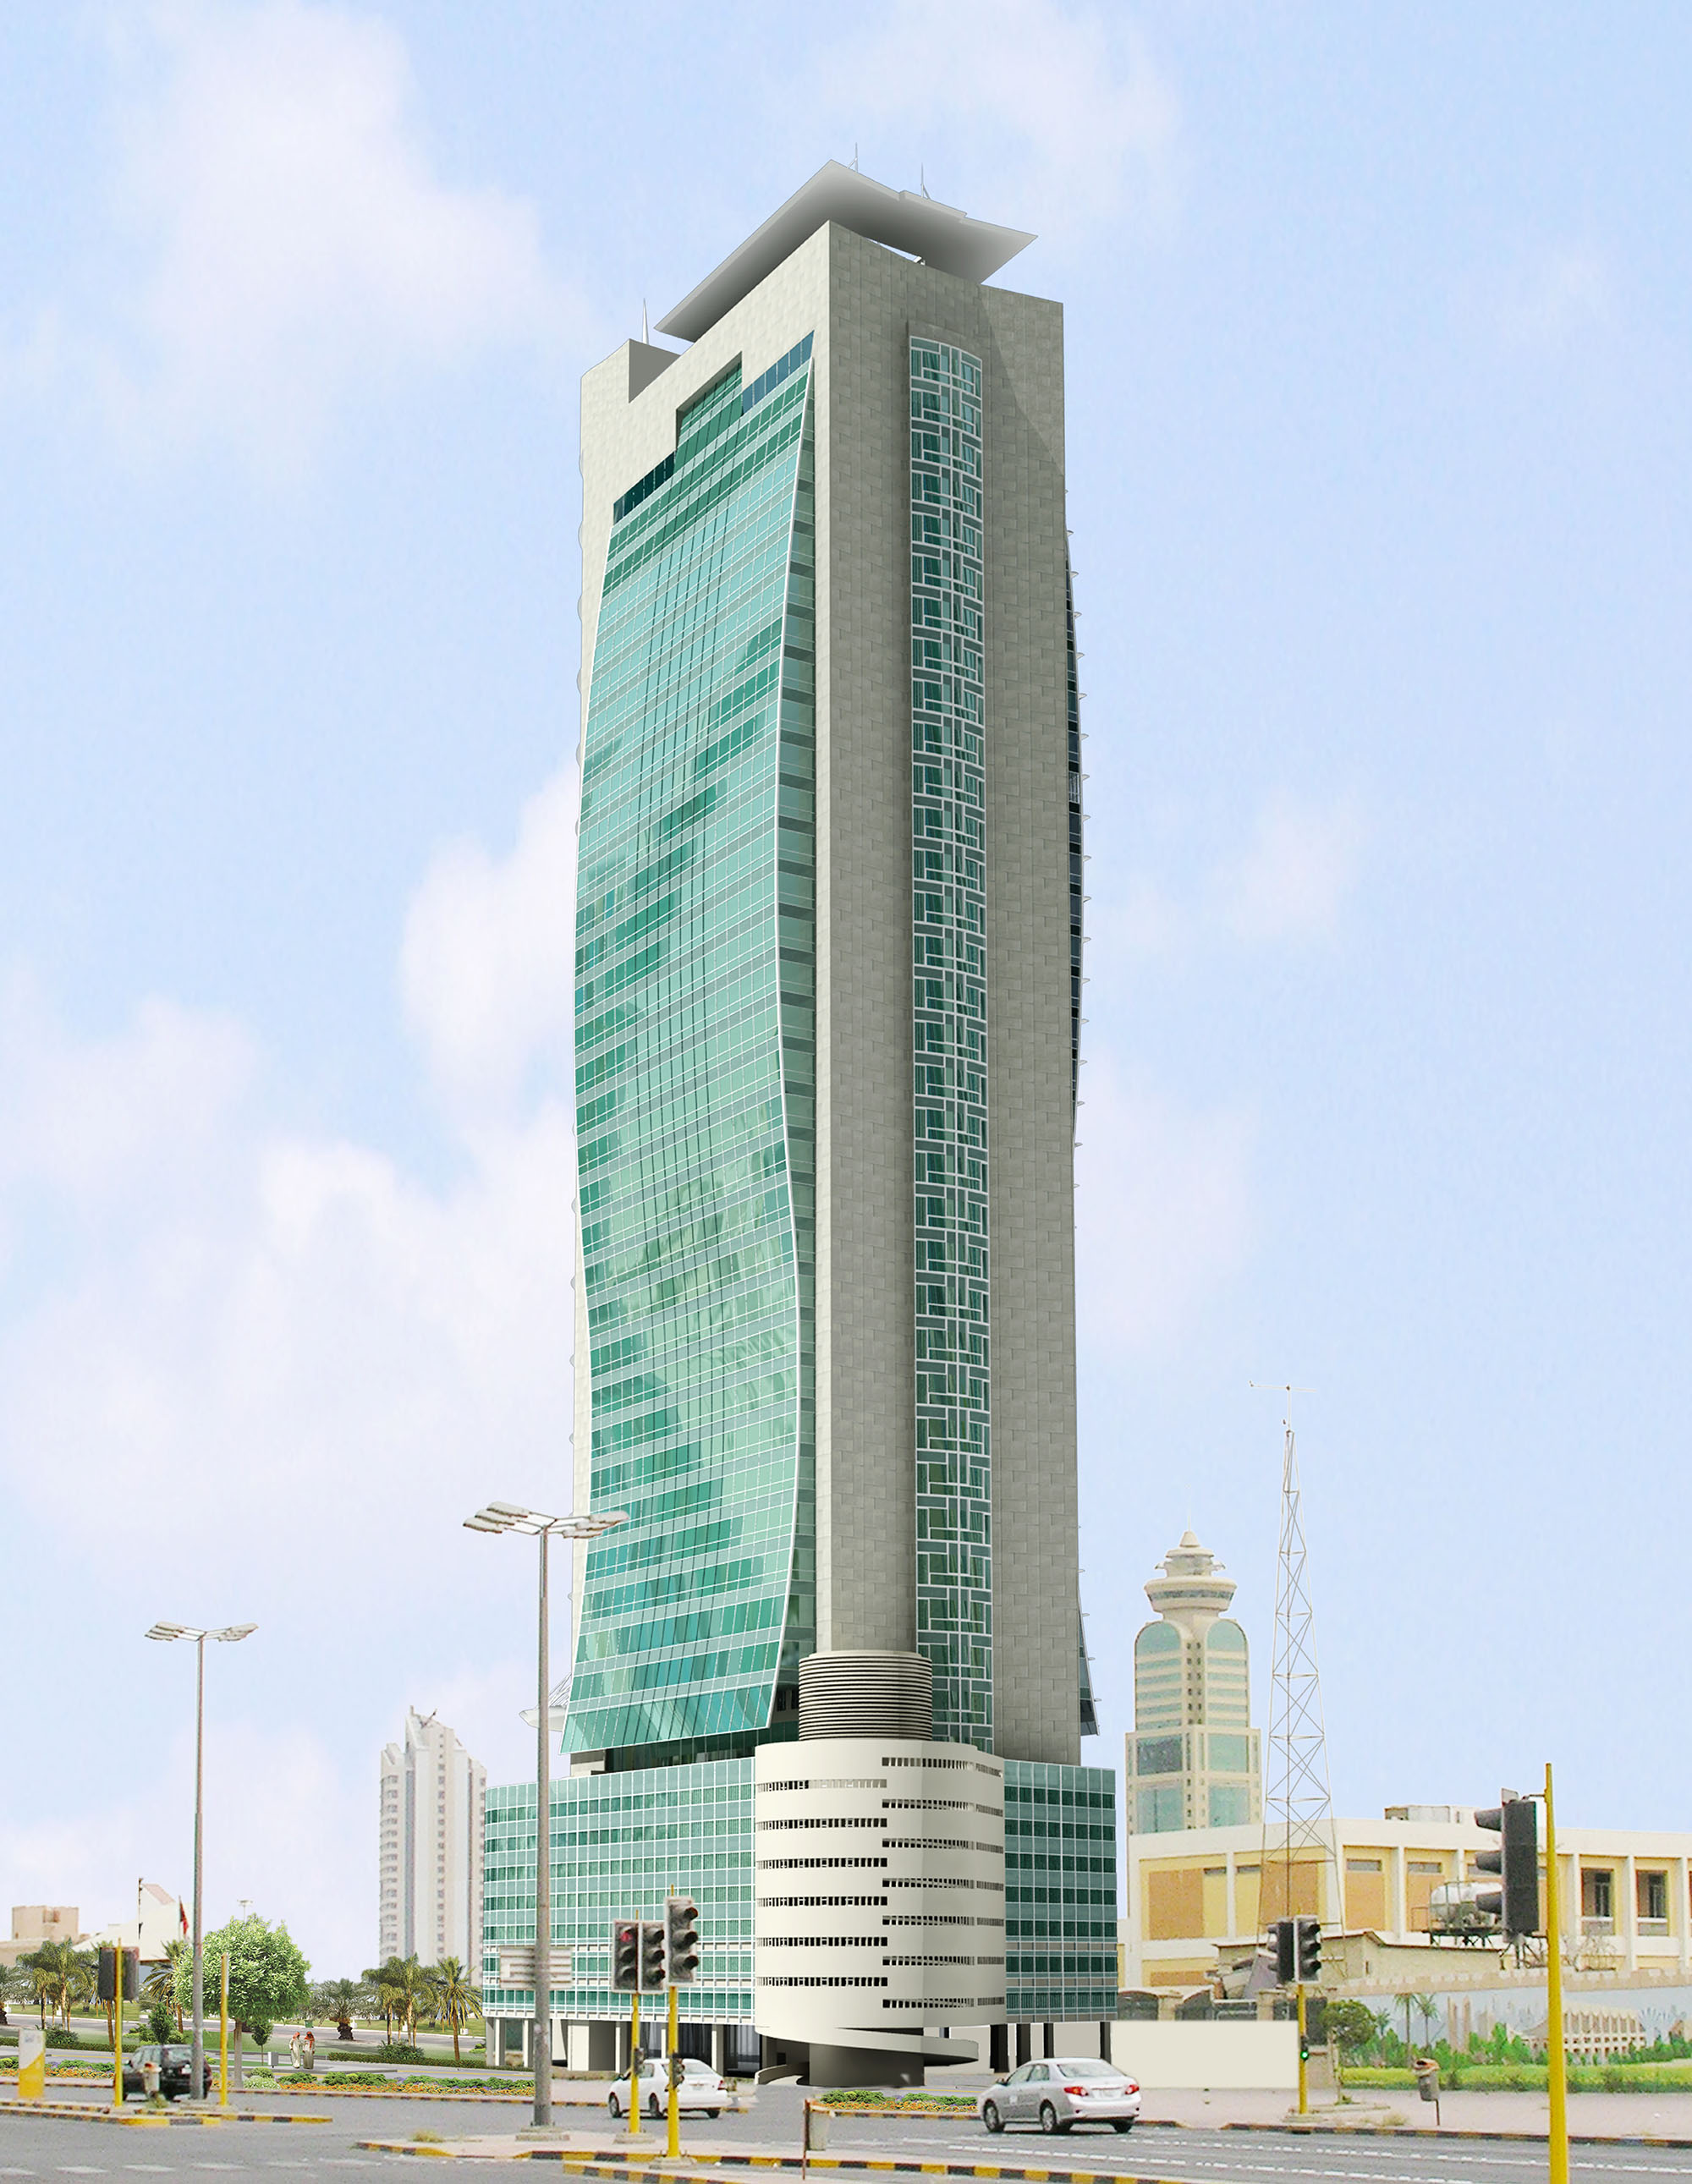 Al Shuhada Administration Building